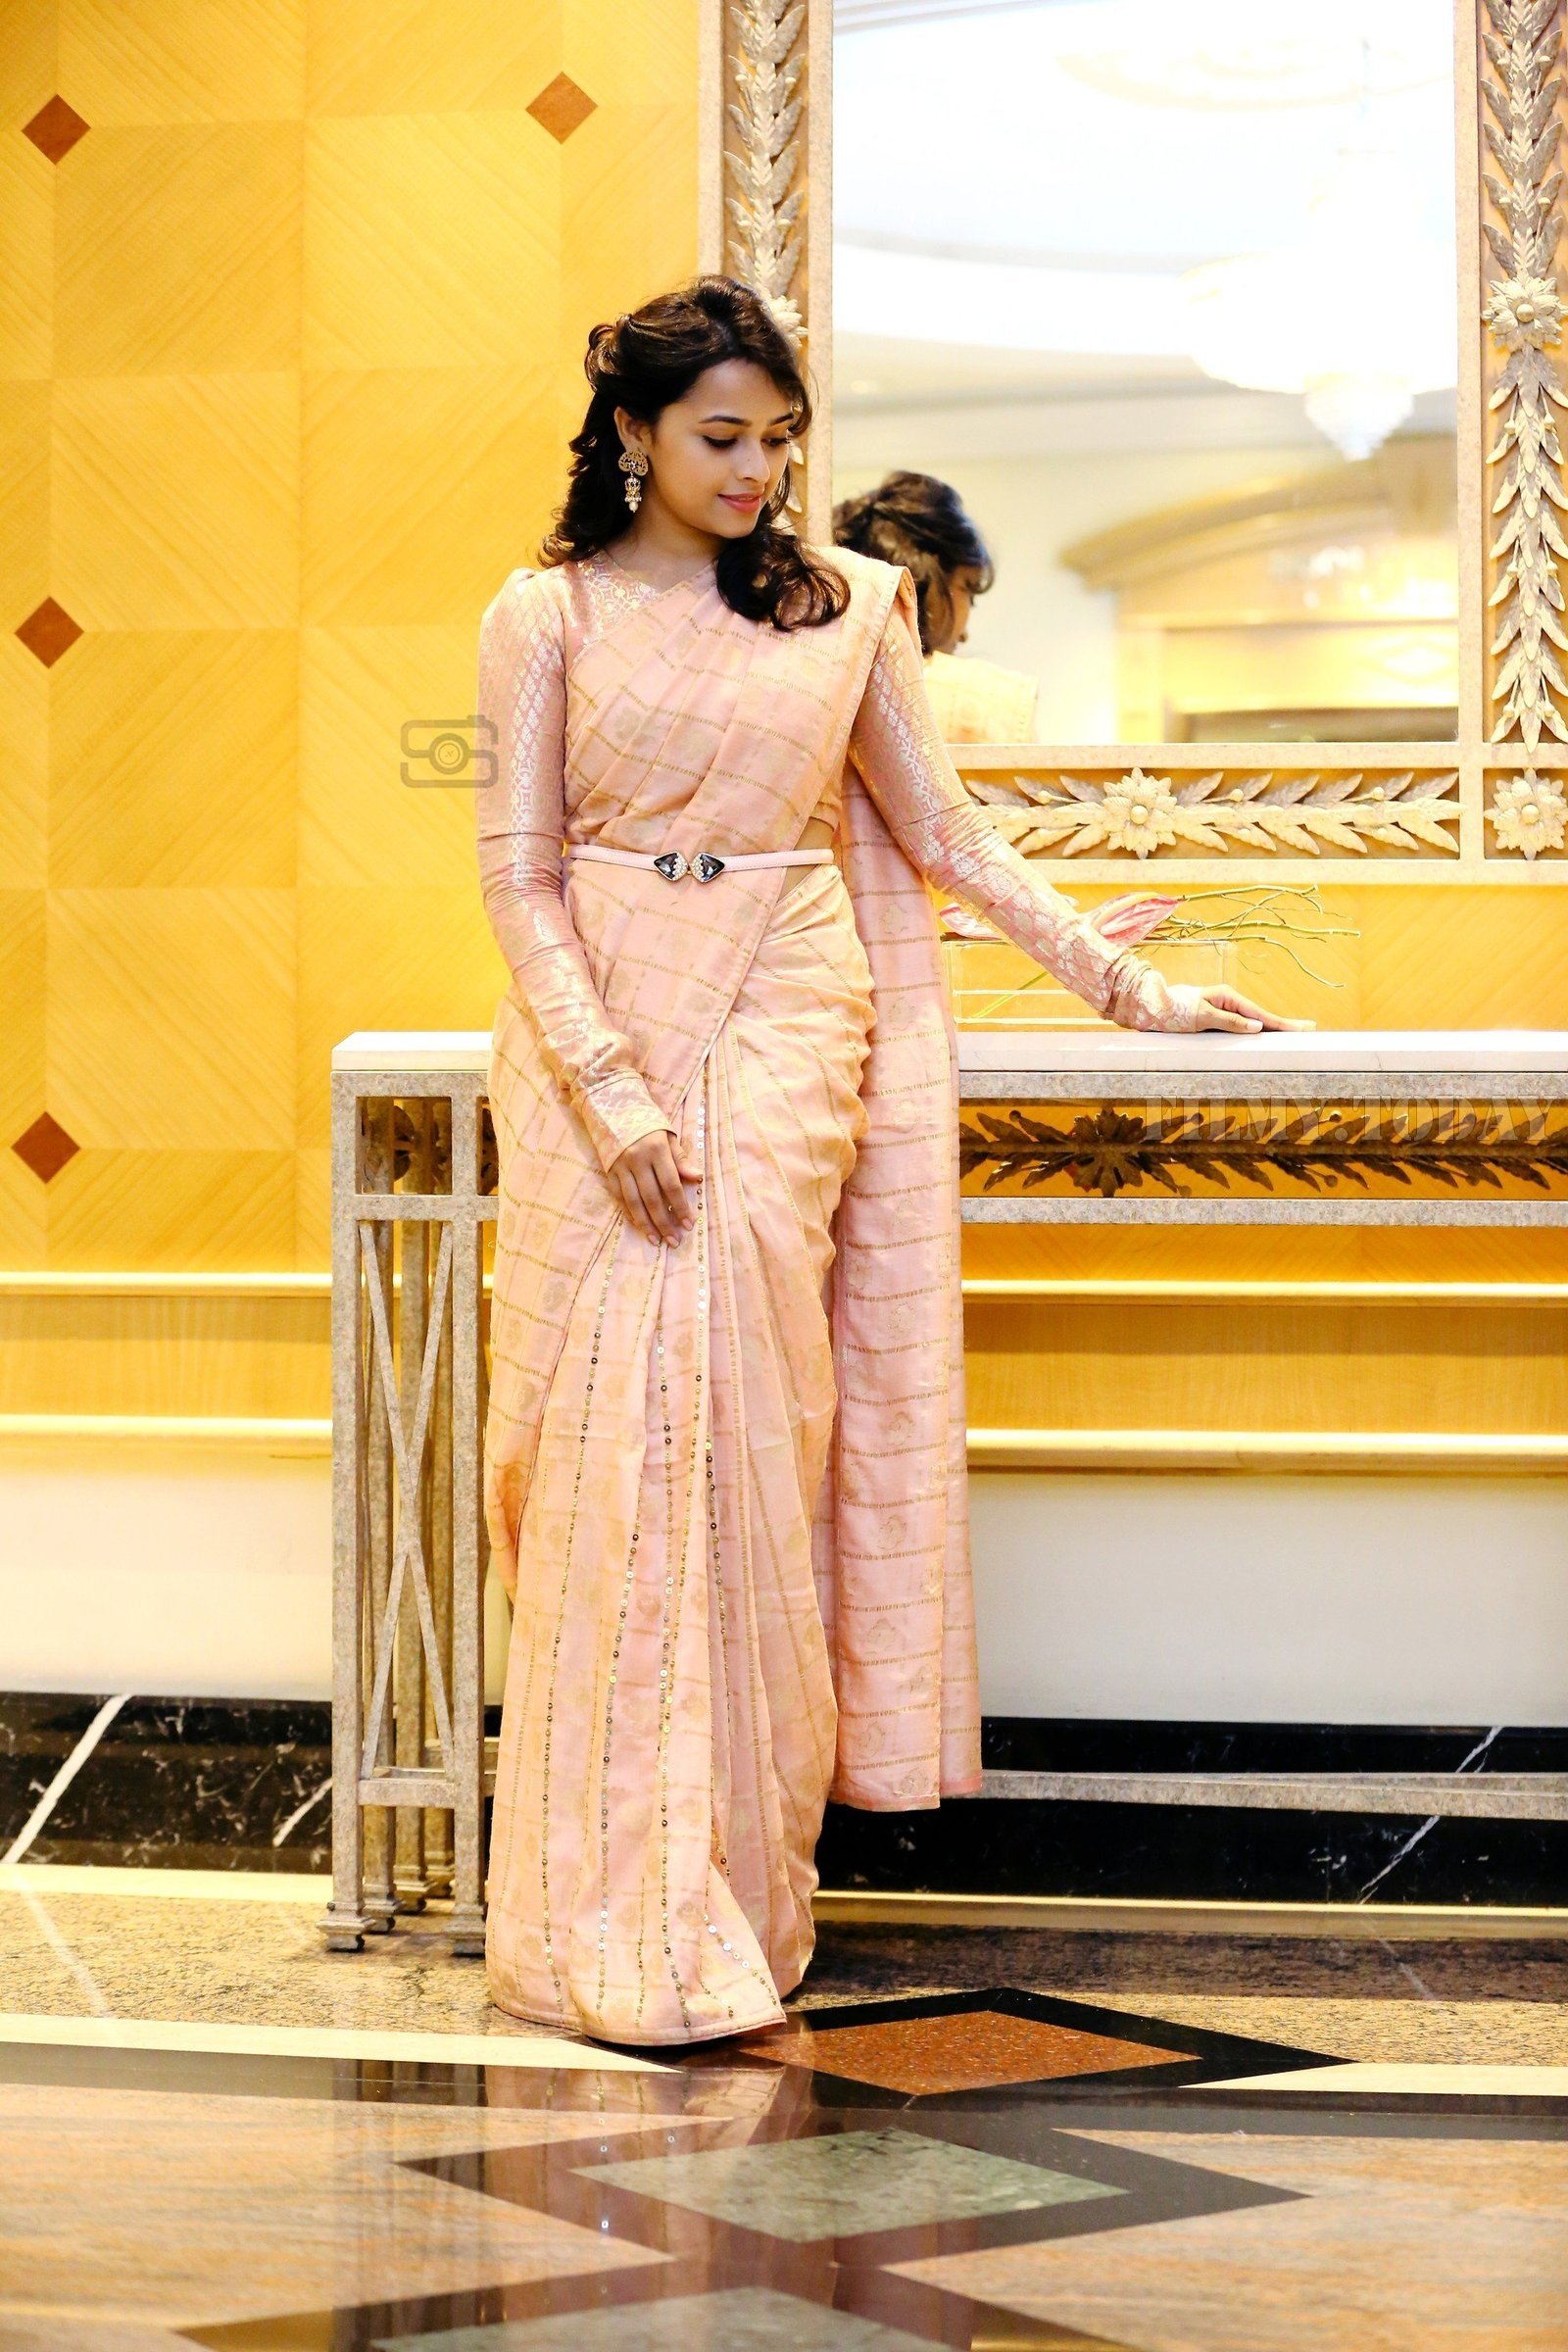 Actress Sri Divya Exclusive Photoshoot | Picture 1558951